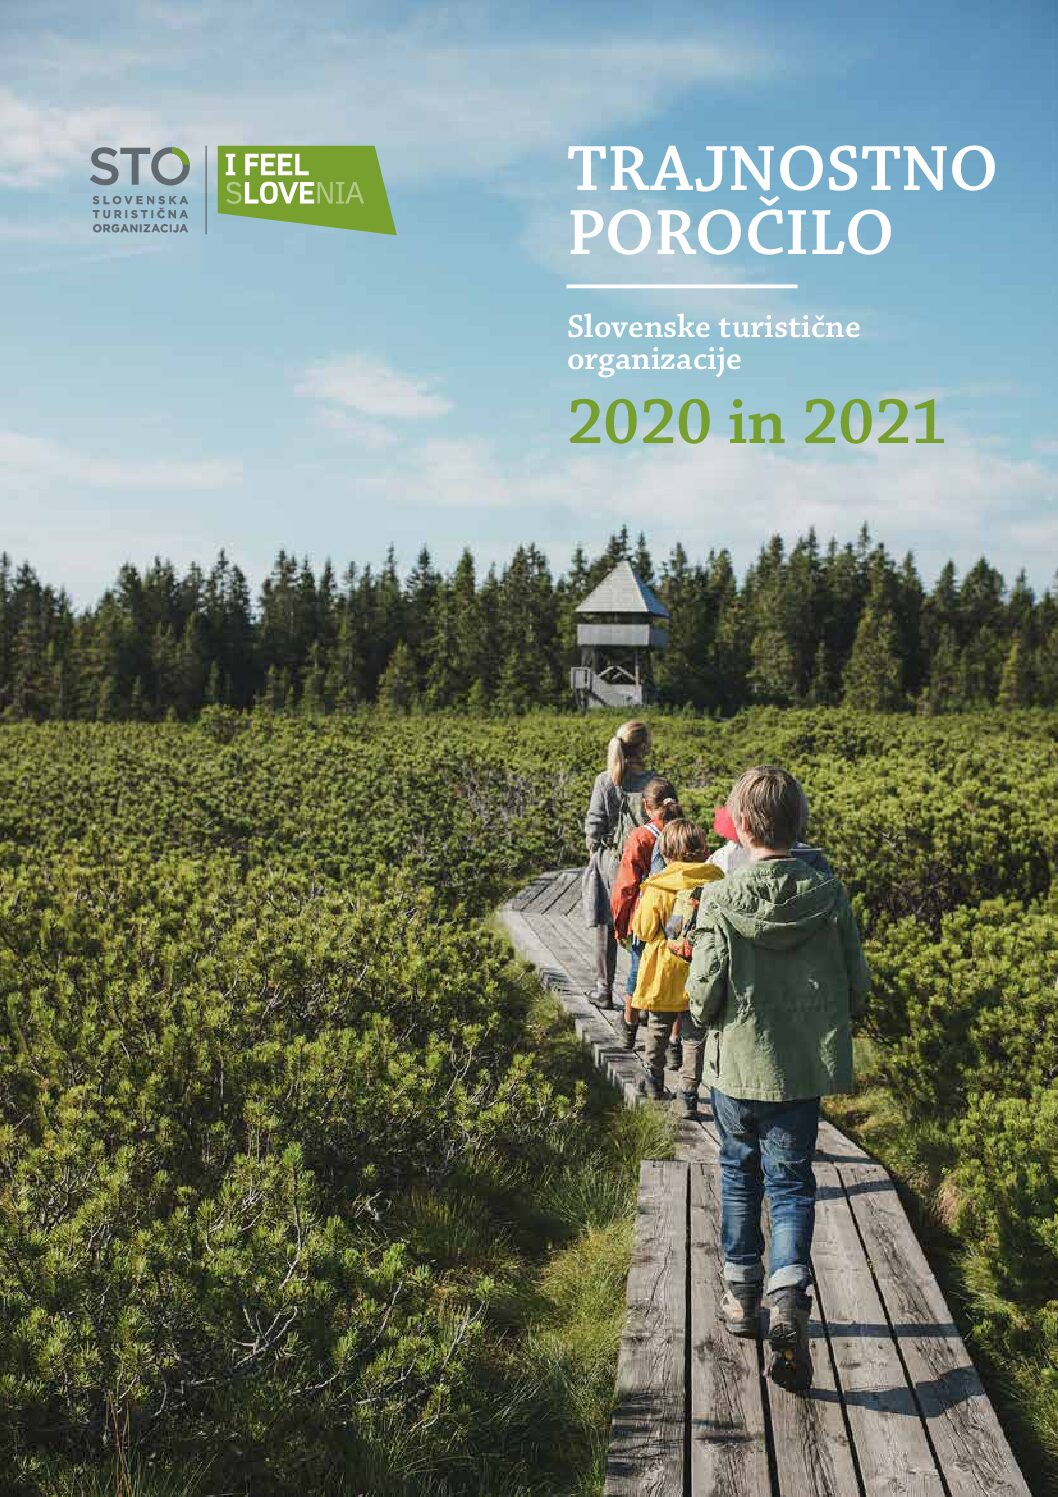 Trajnostno porocilo STO 2020 2021 pdf